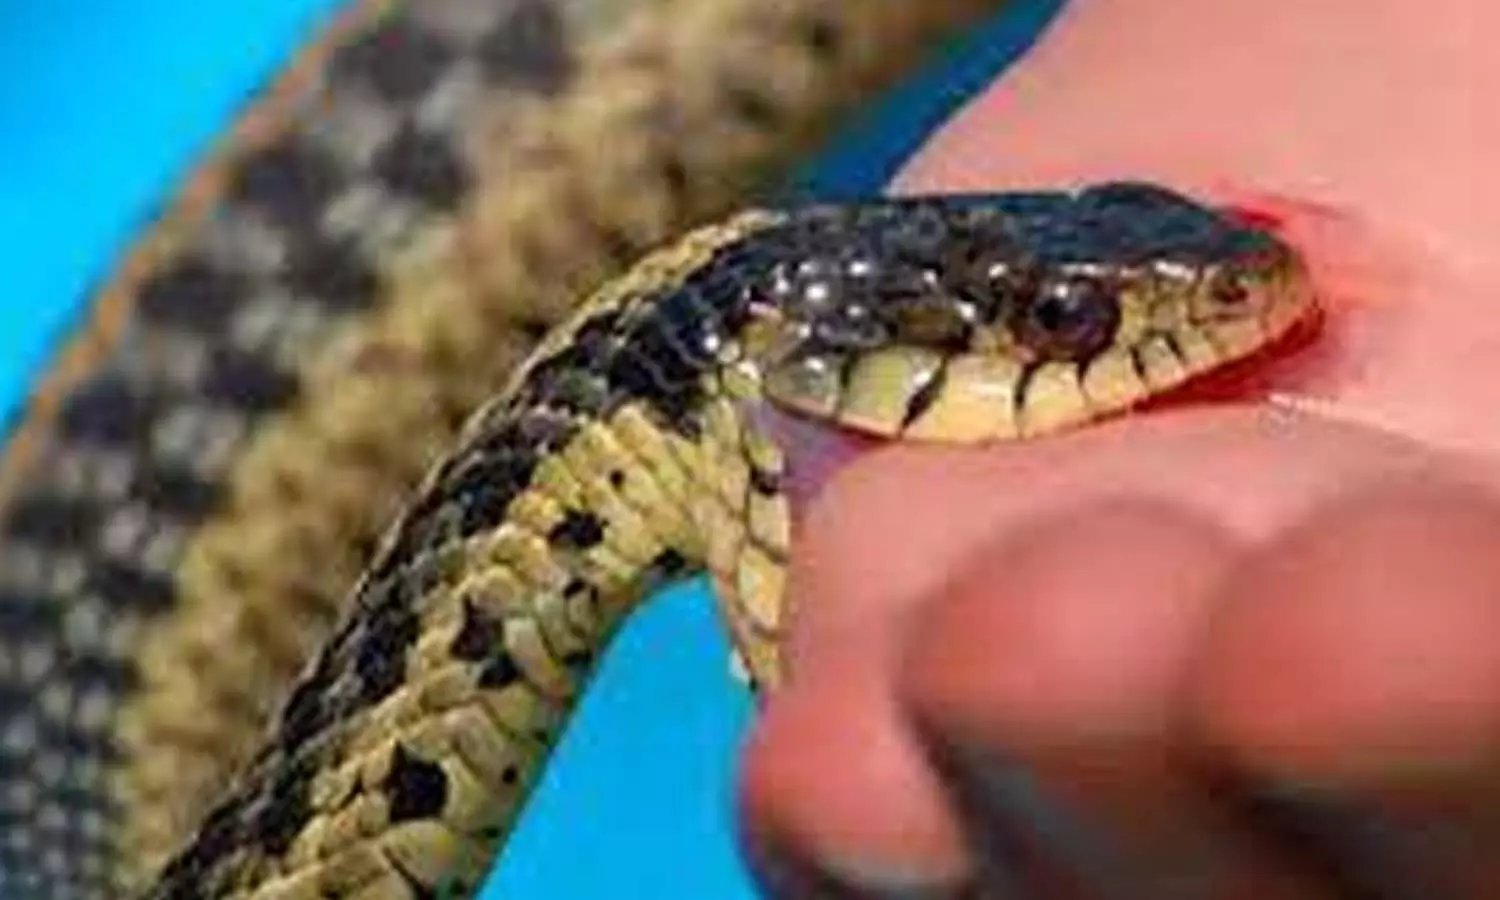 Poisonous snake bites an innocent, death